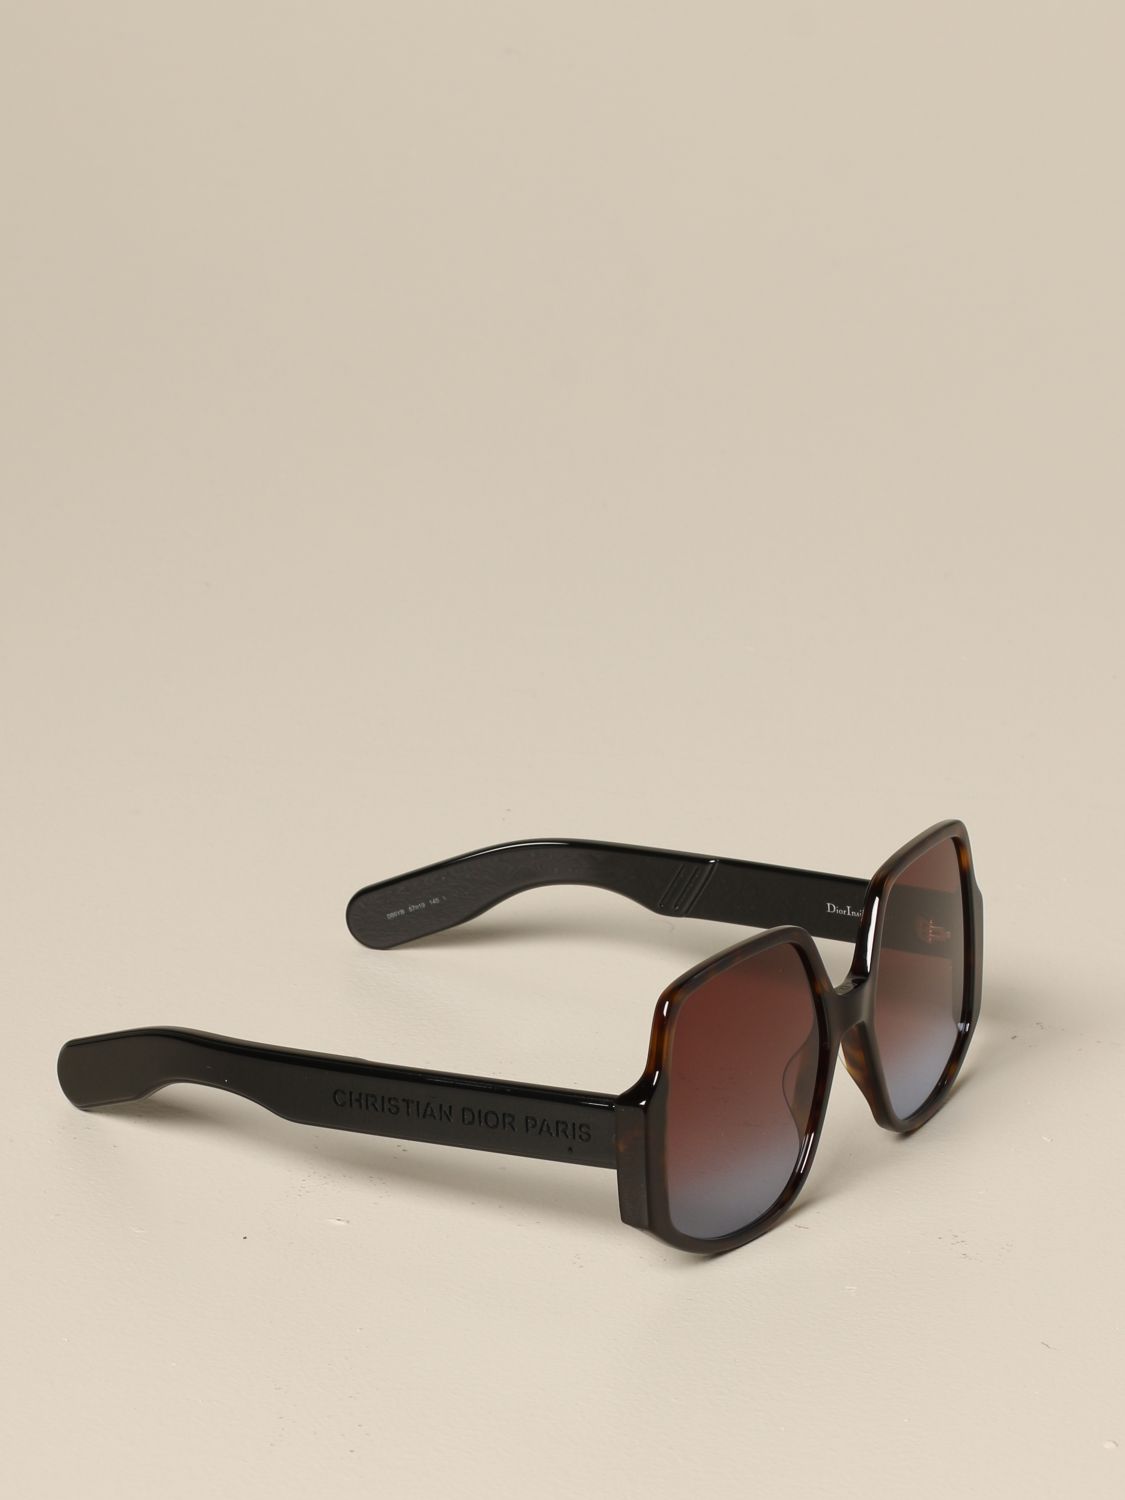 Sunglasses  Christian Dior  Gafas  Gafas de sol  Dior  Luxury Brand  Outlet